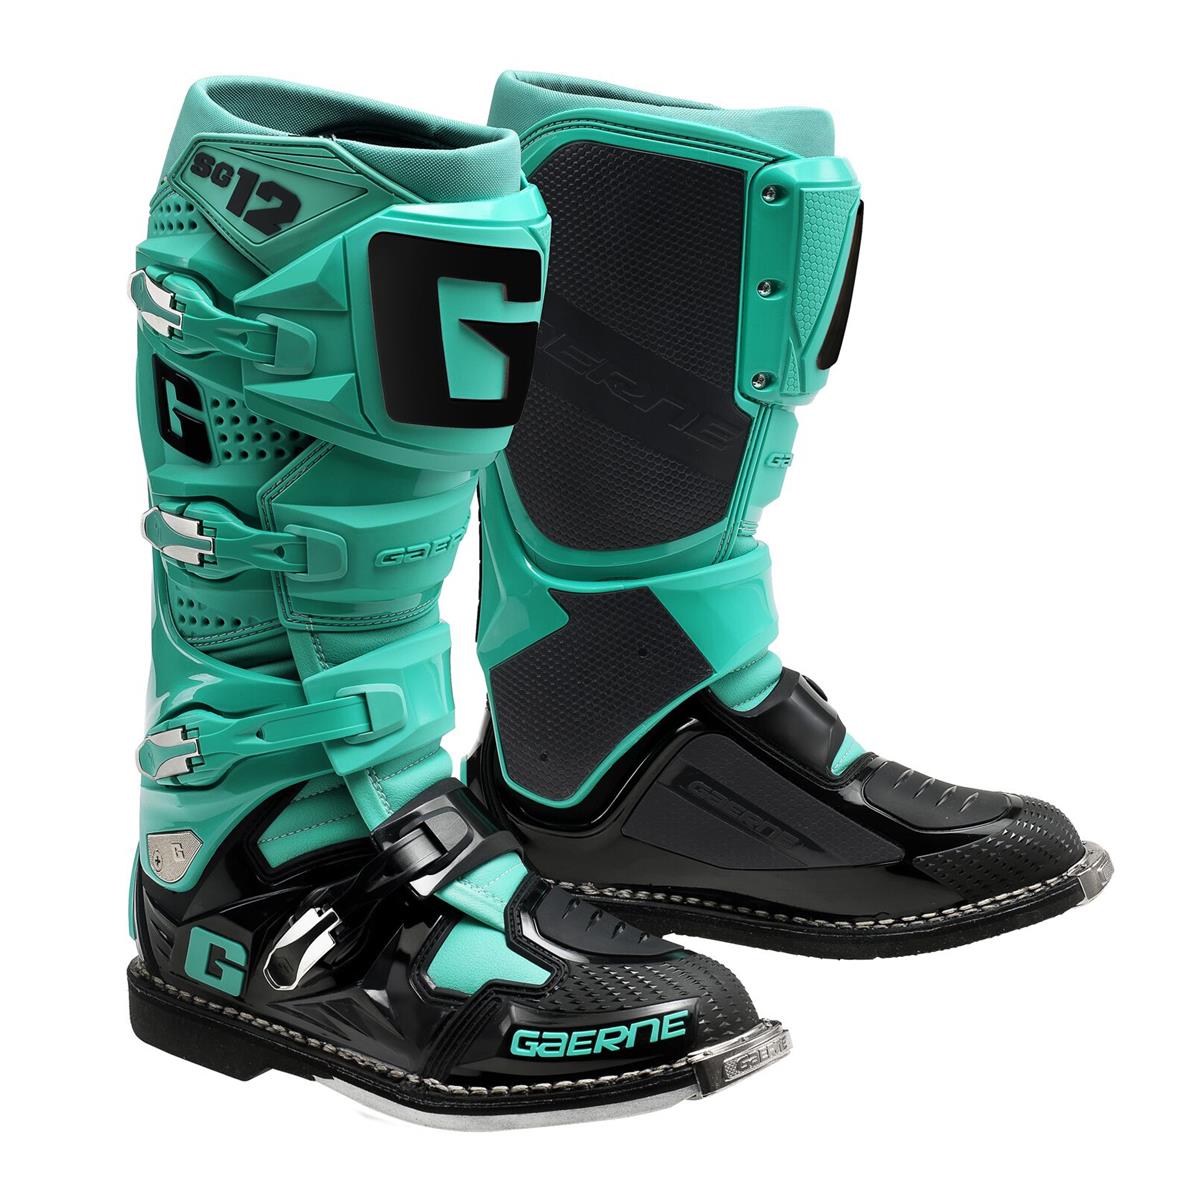 Gaerne MX Boots SG 12 Aqua/Black - Special Edition